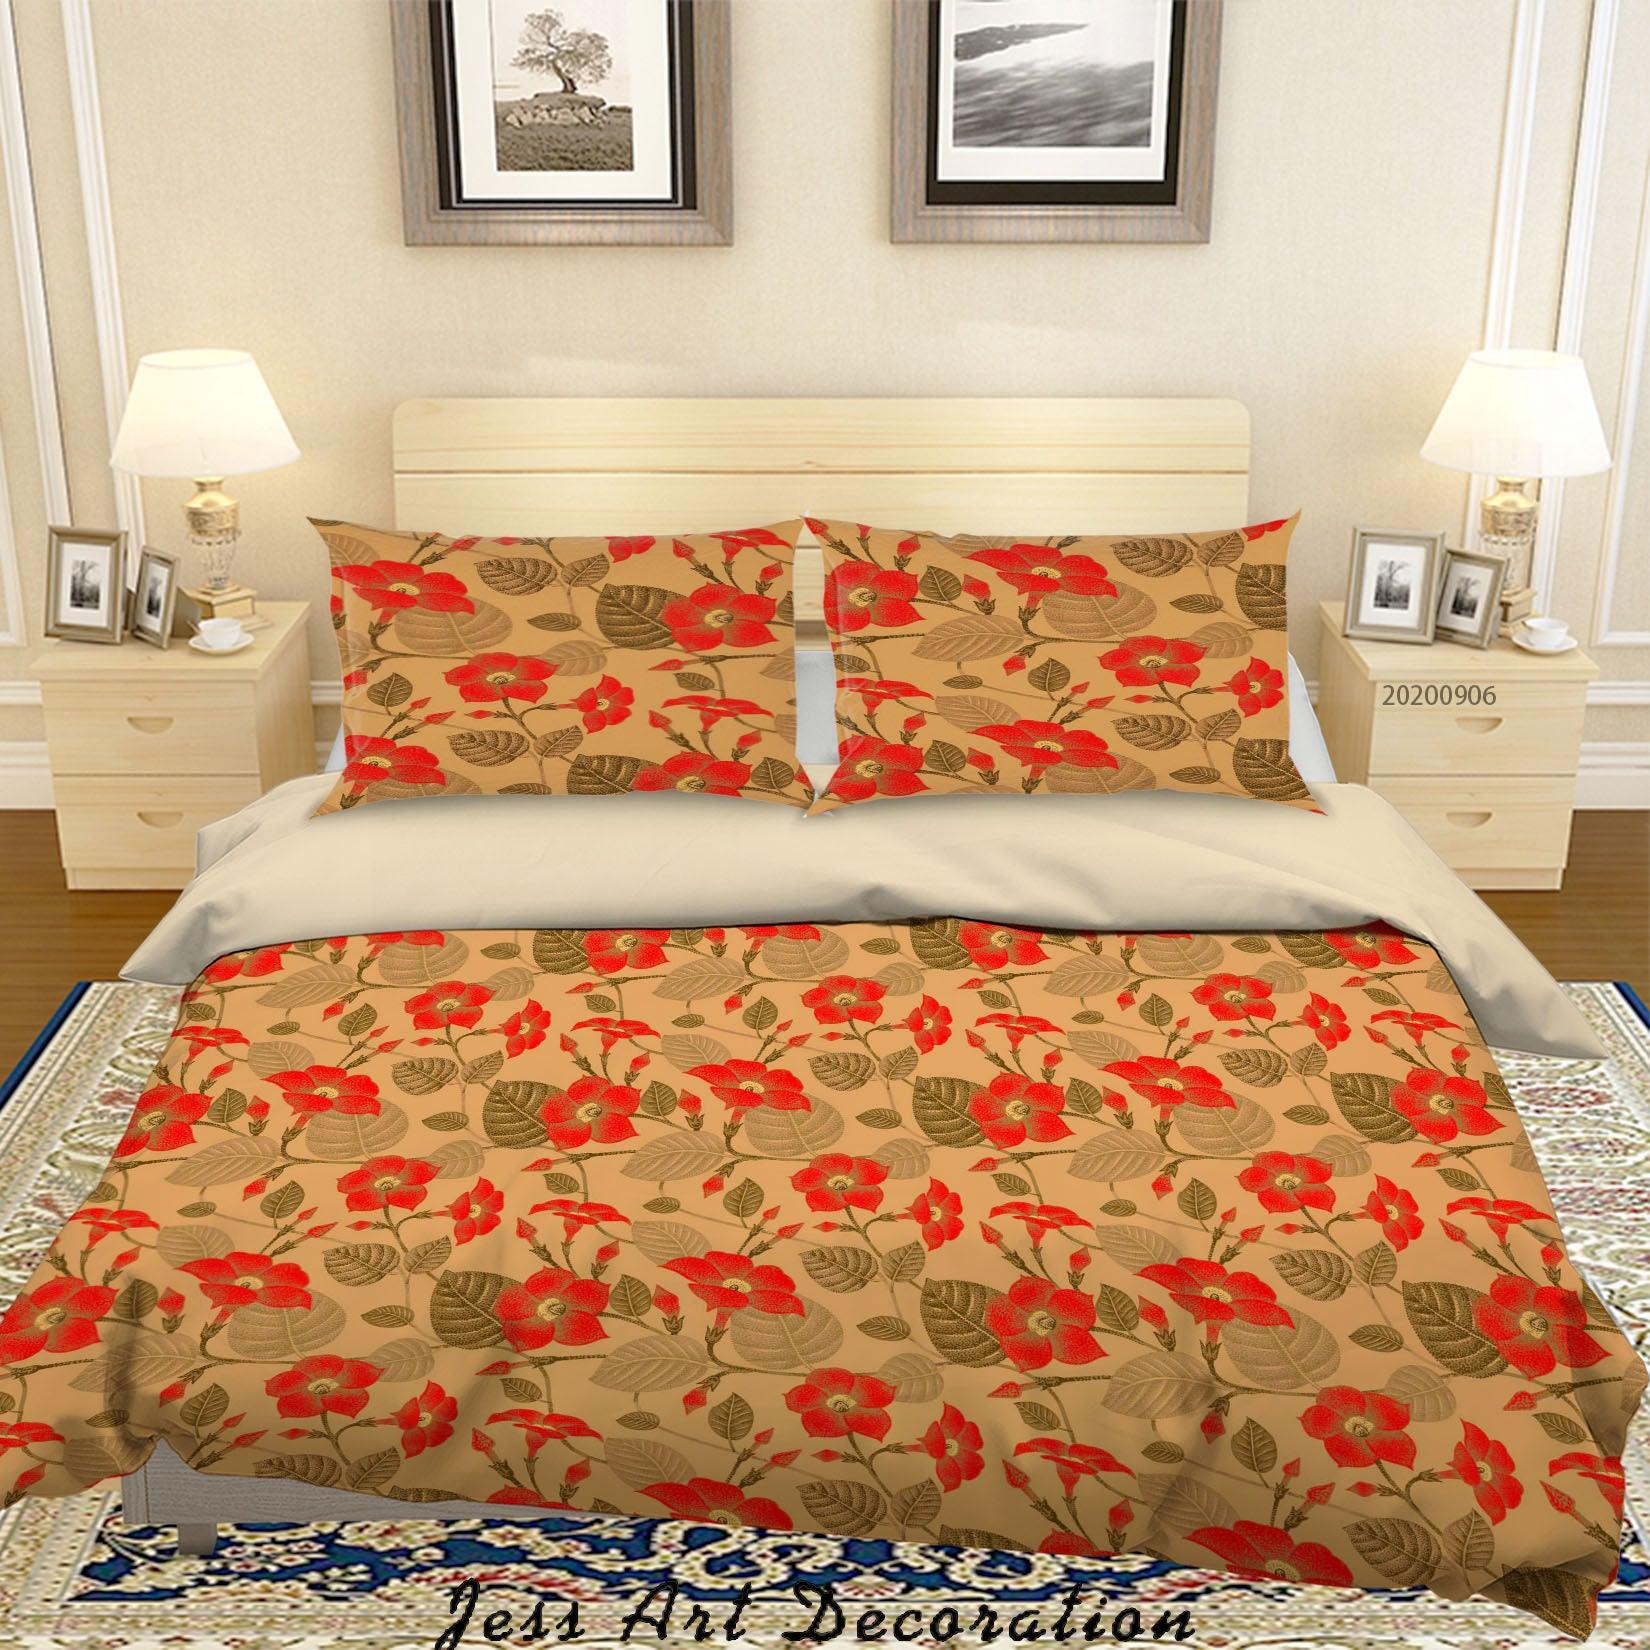 3D Vintage Leaves Red Floral Pattern Quilt Cover Set Bedding Set Duvet Cover Pillowcases WJ 3624- Jess Art Decoration